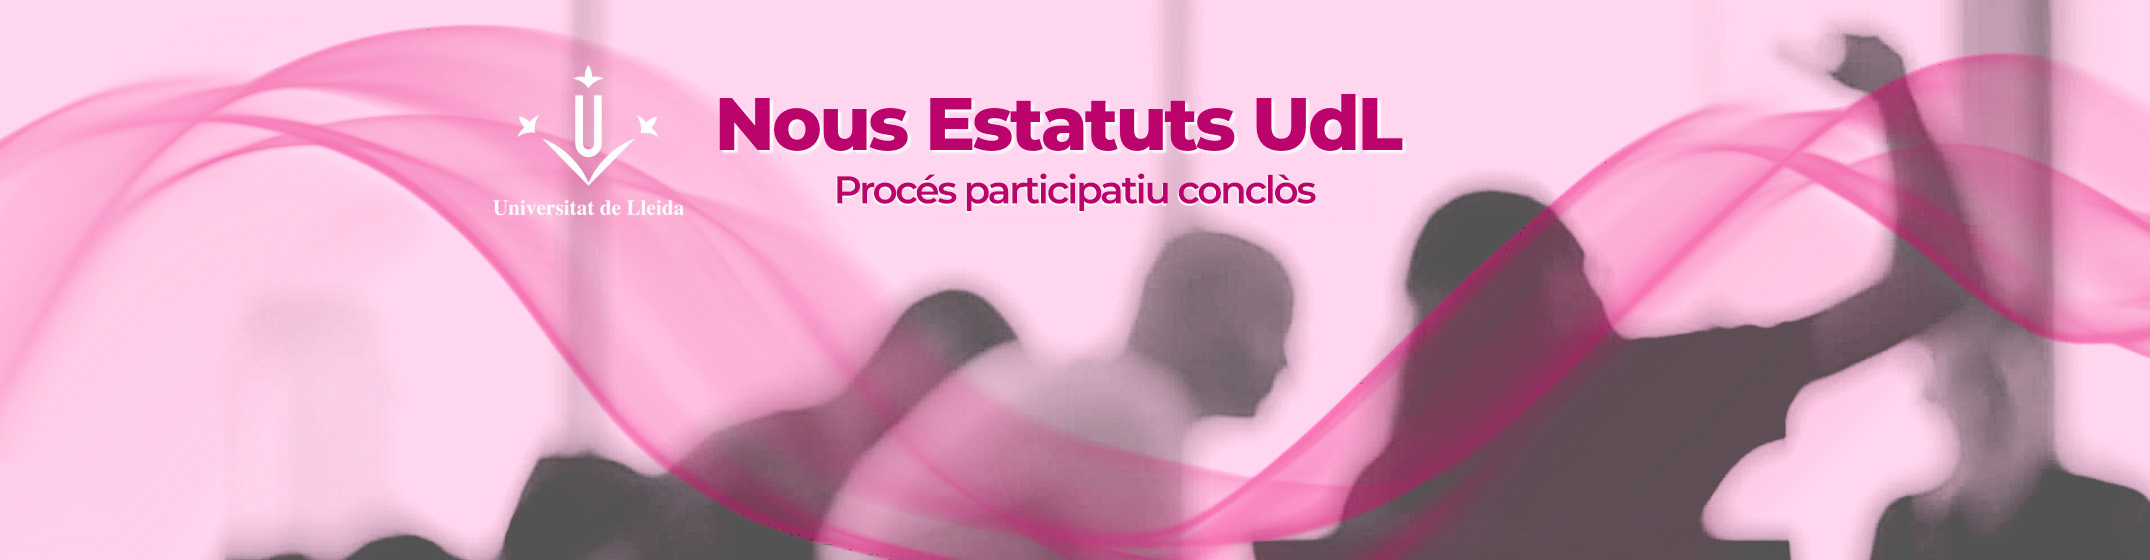 Nous Estatuts de la UdL: procés participatiu conclòs